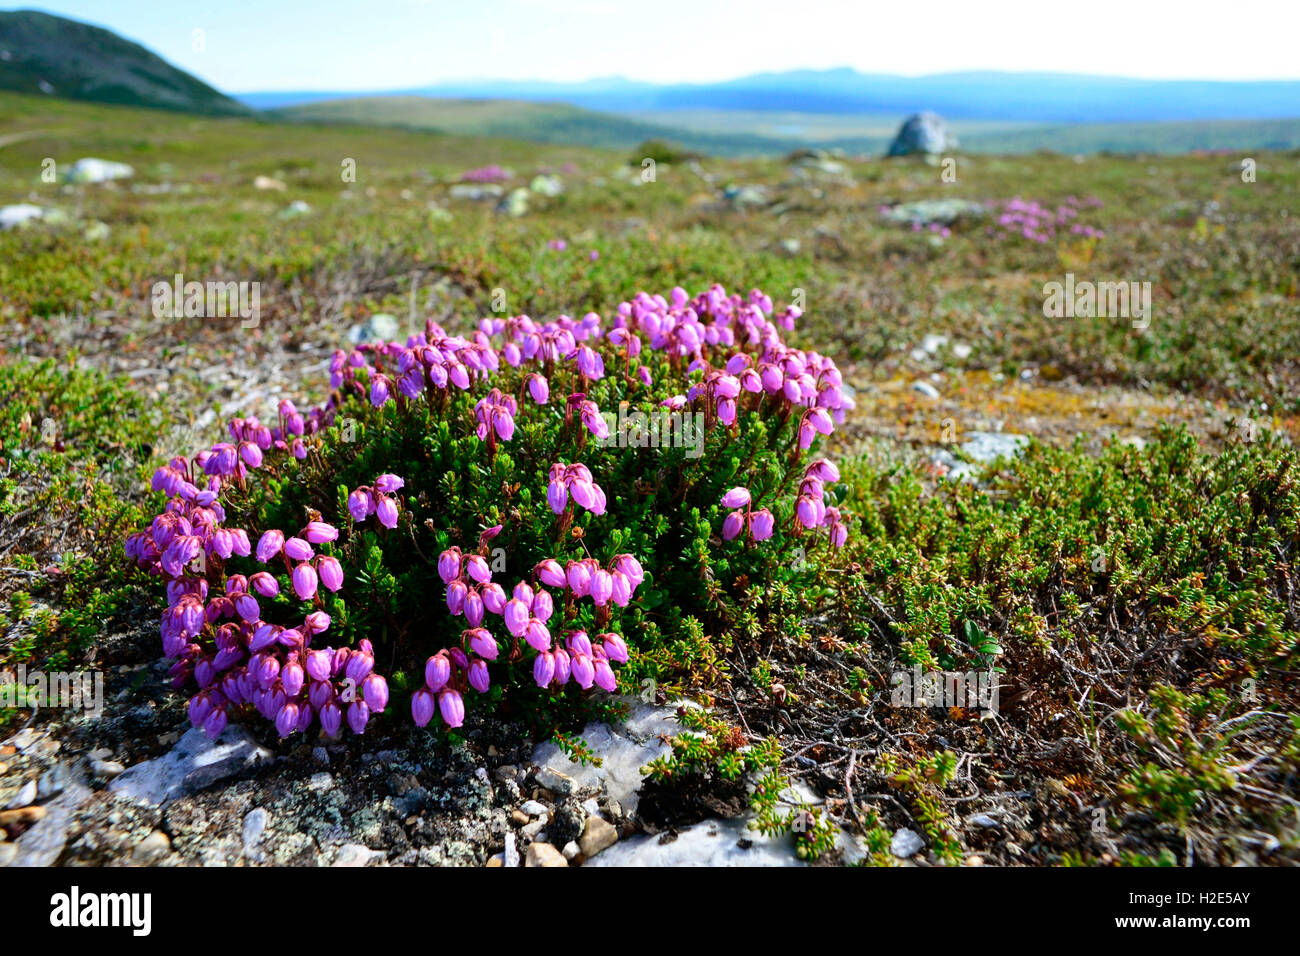 Blue Mountain Heath, Blue Mountainheath (Phyllodoce caerulea, Andromeda caerulea. Flowering plants in tundra, Sweden Stock Photo